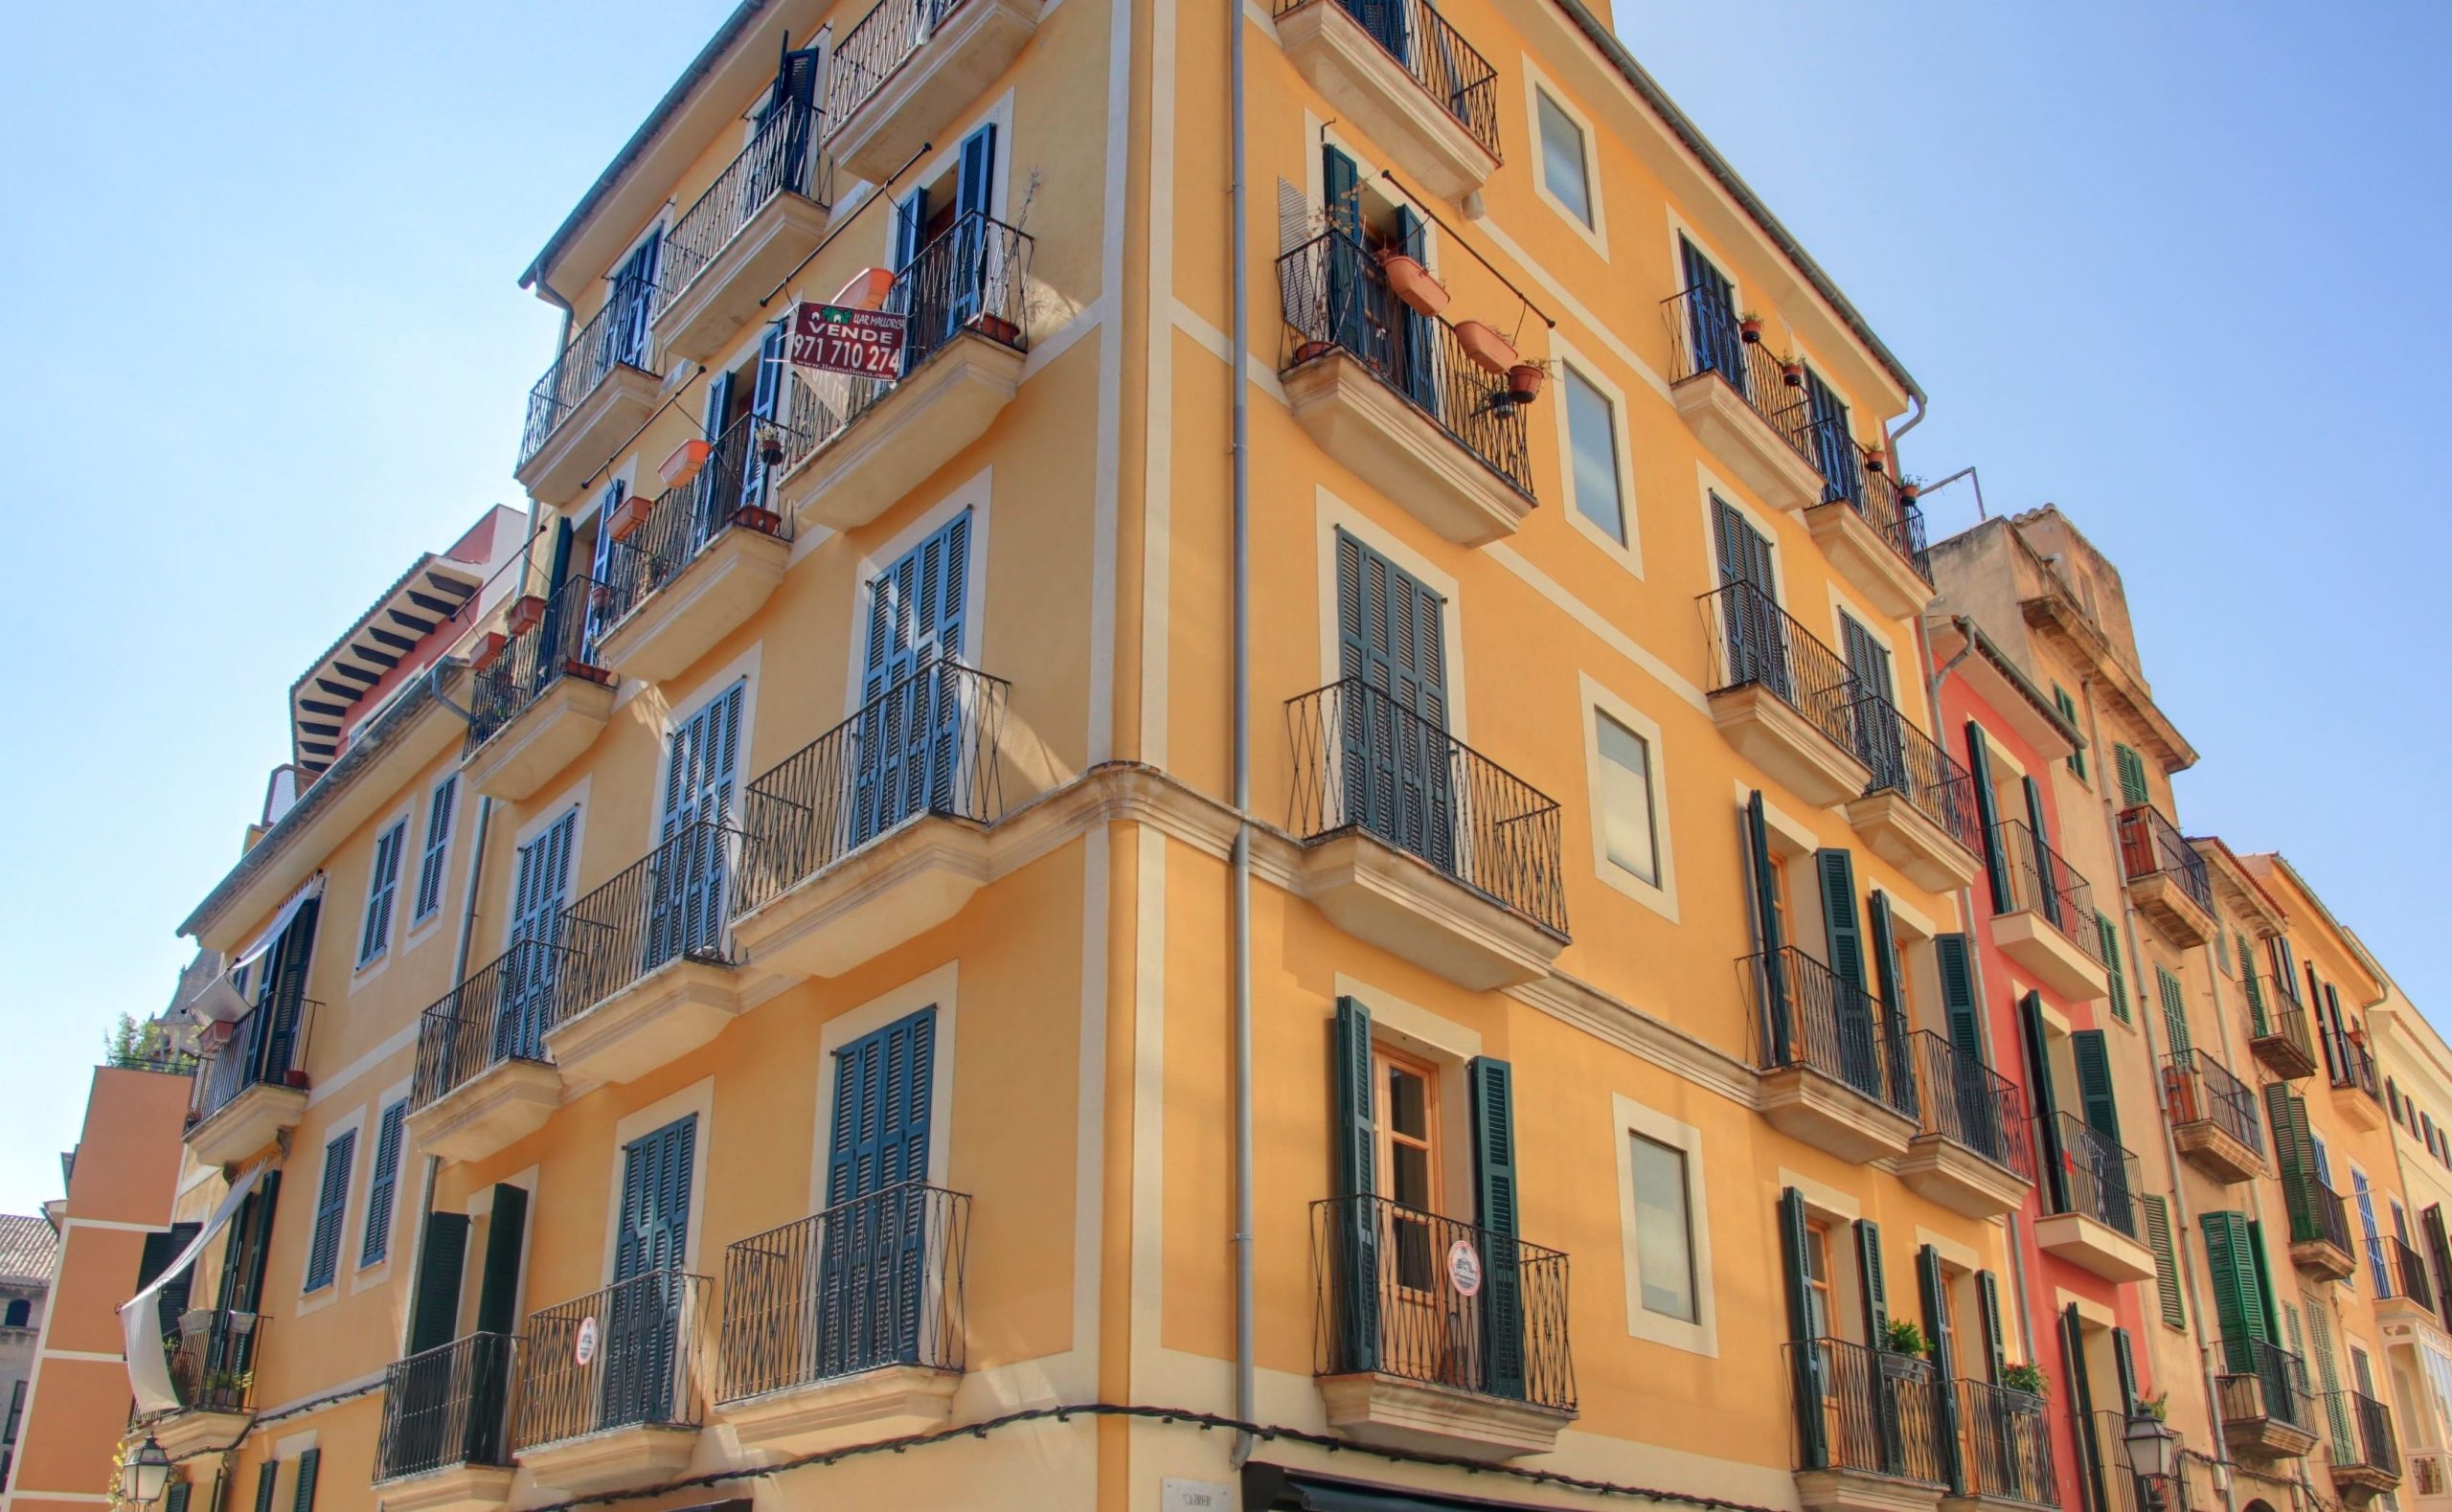 Airbnb Hausfassade in gelb in Palma - Mallorca